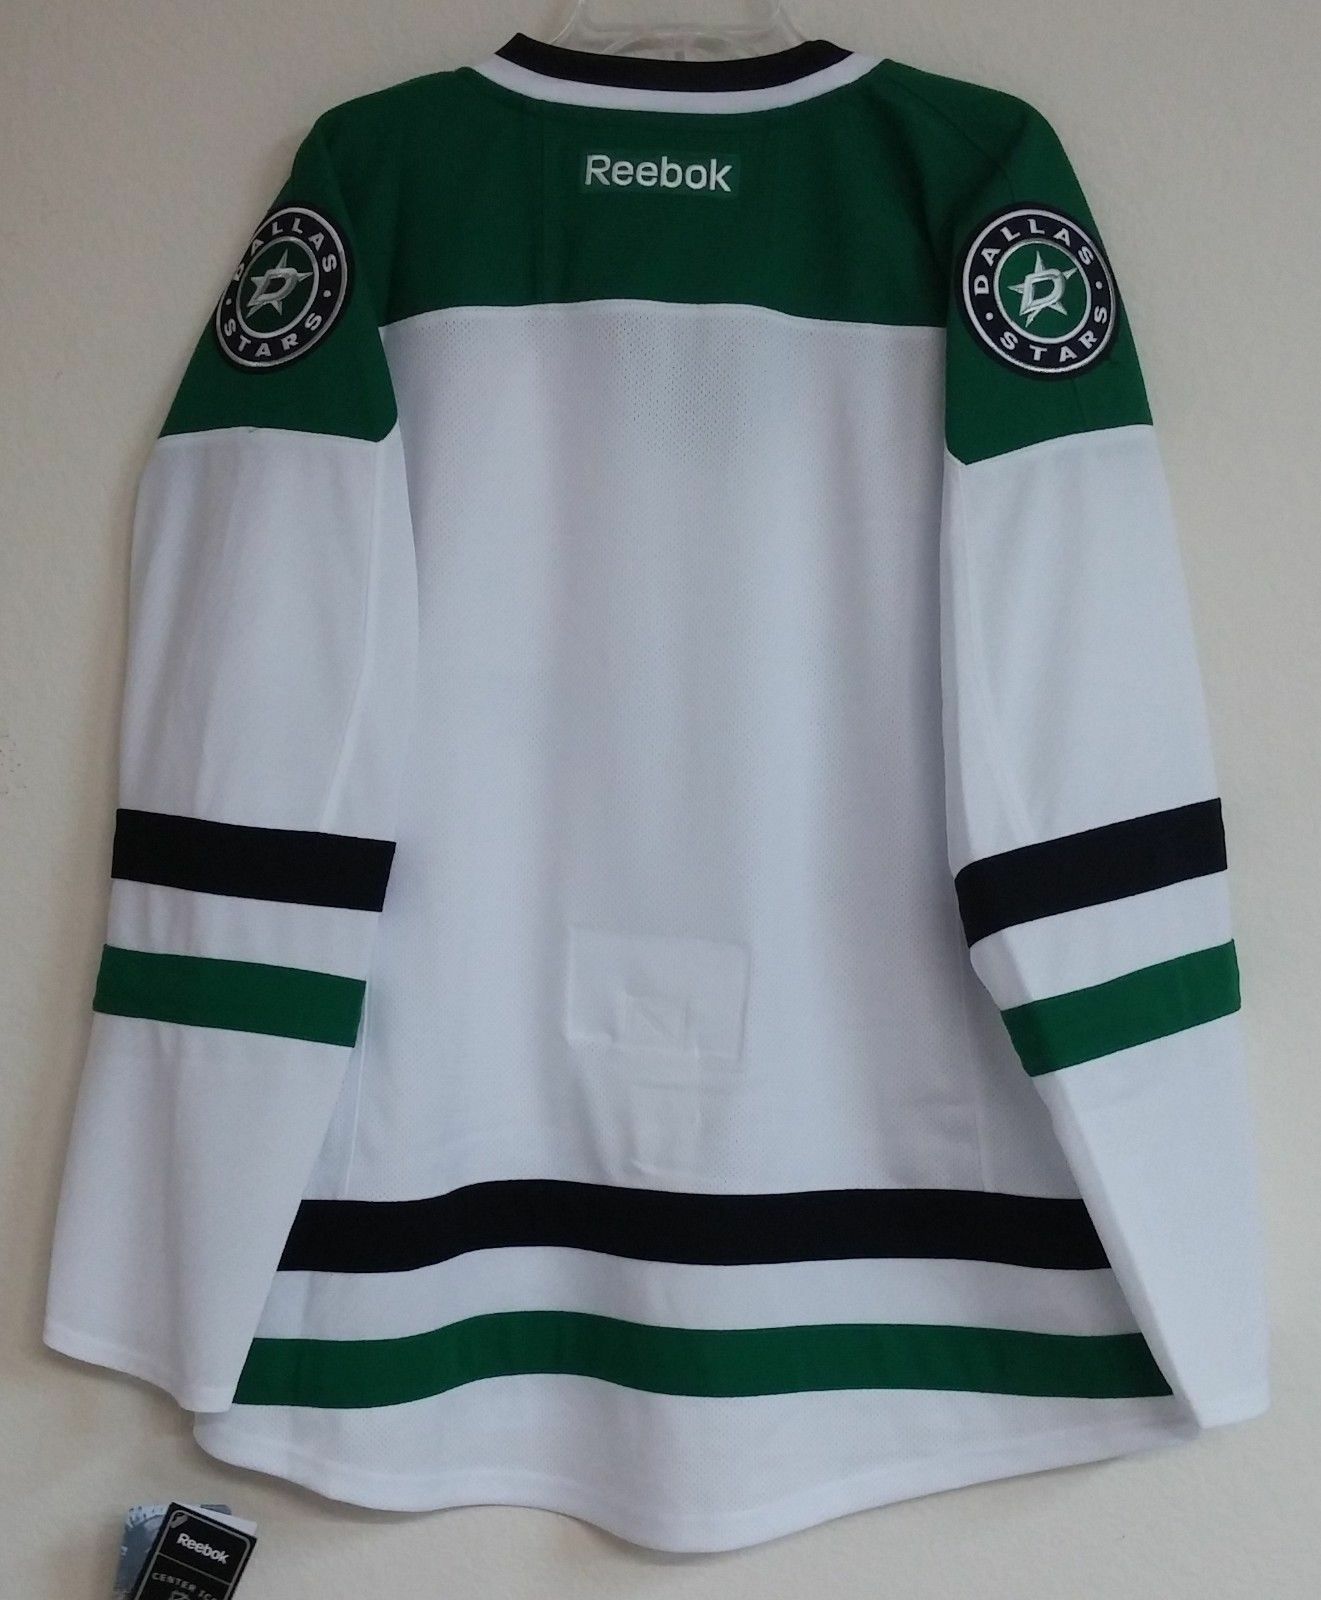 DALLAS STARS reebok NHL authentic EDGE 1.0 hockey jersey away-white size 52 NEW Image 2